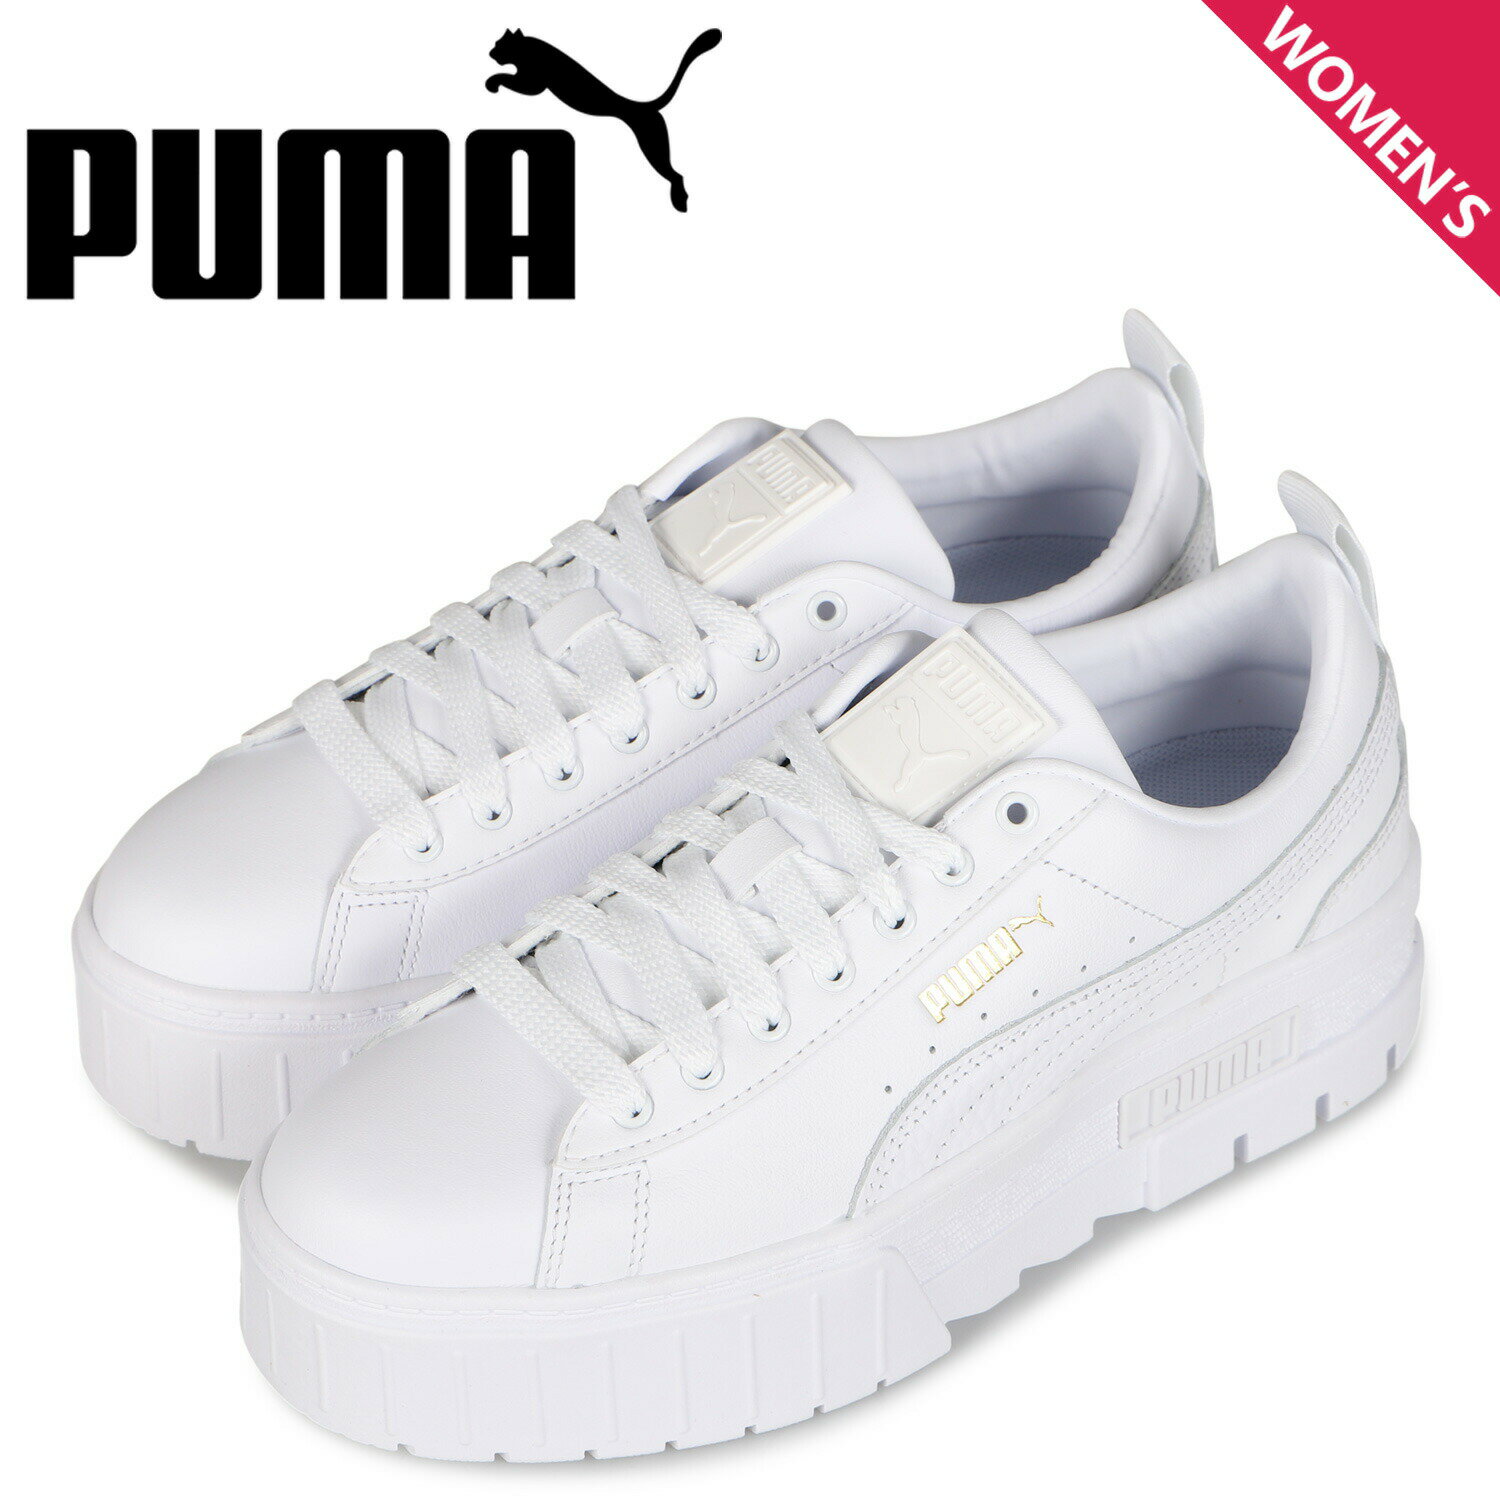 PUMA WMNS MAYZE CLASSIC プーマ スニーカー レディース 厚底 メイズ クラシック ホワイト 白 384209-01